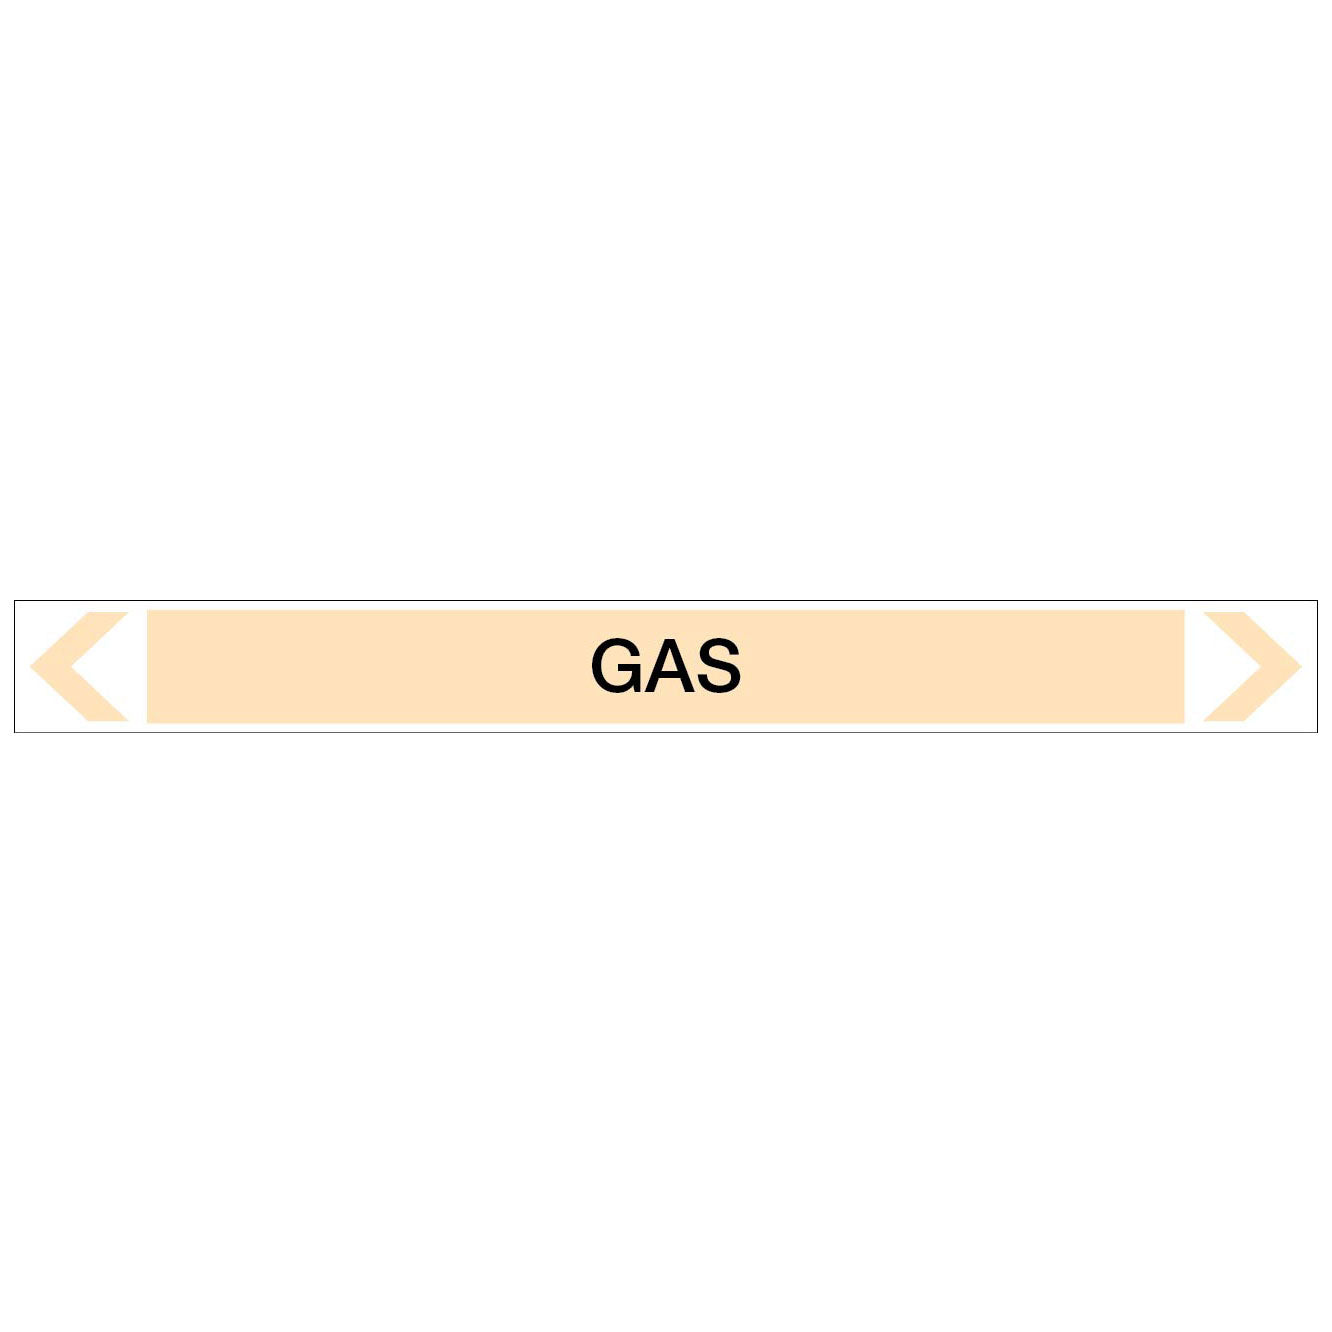 Gases - Gas - Pipe Marker Sticker